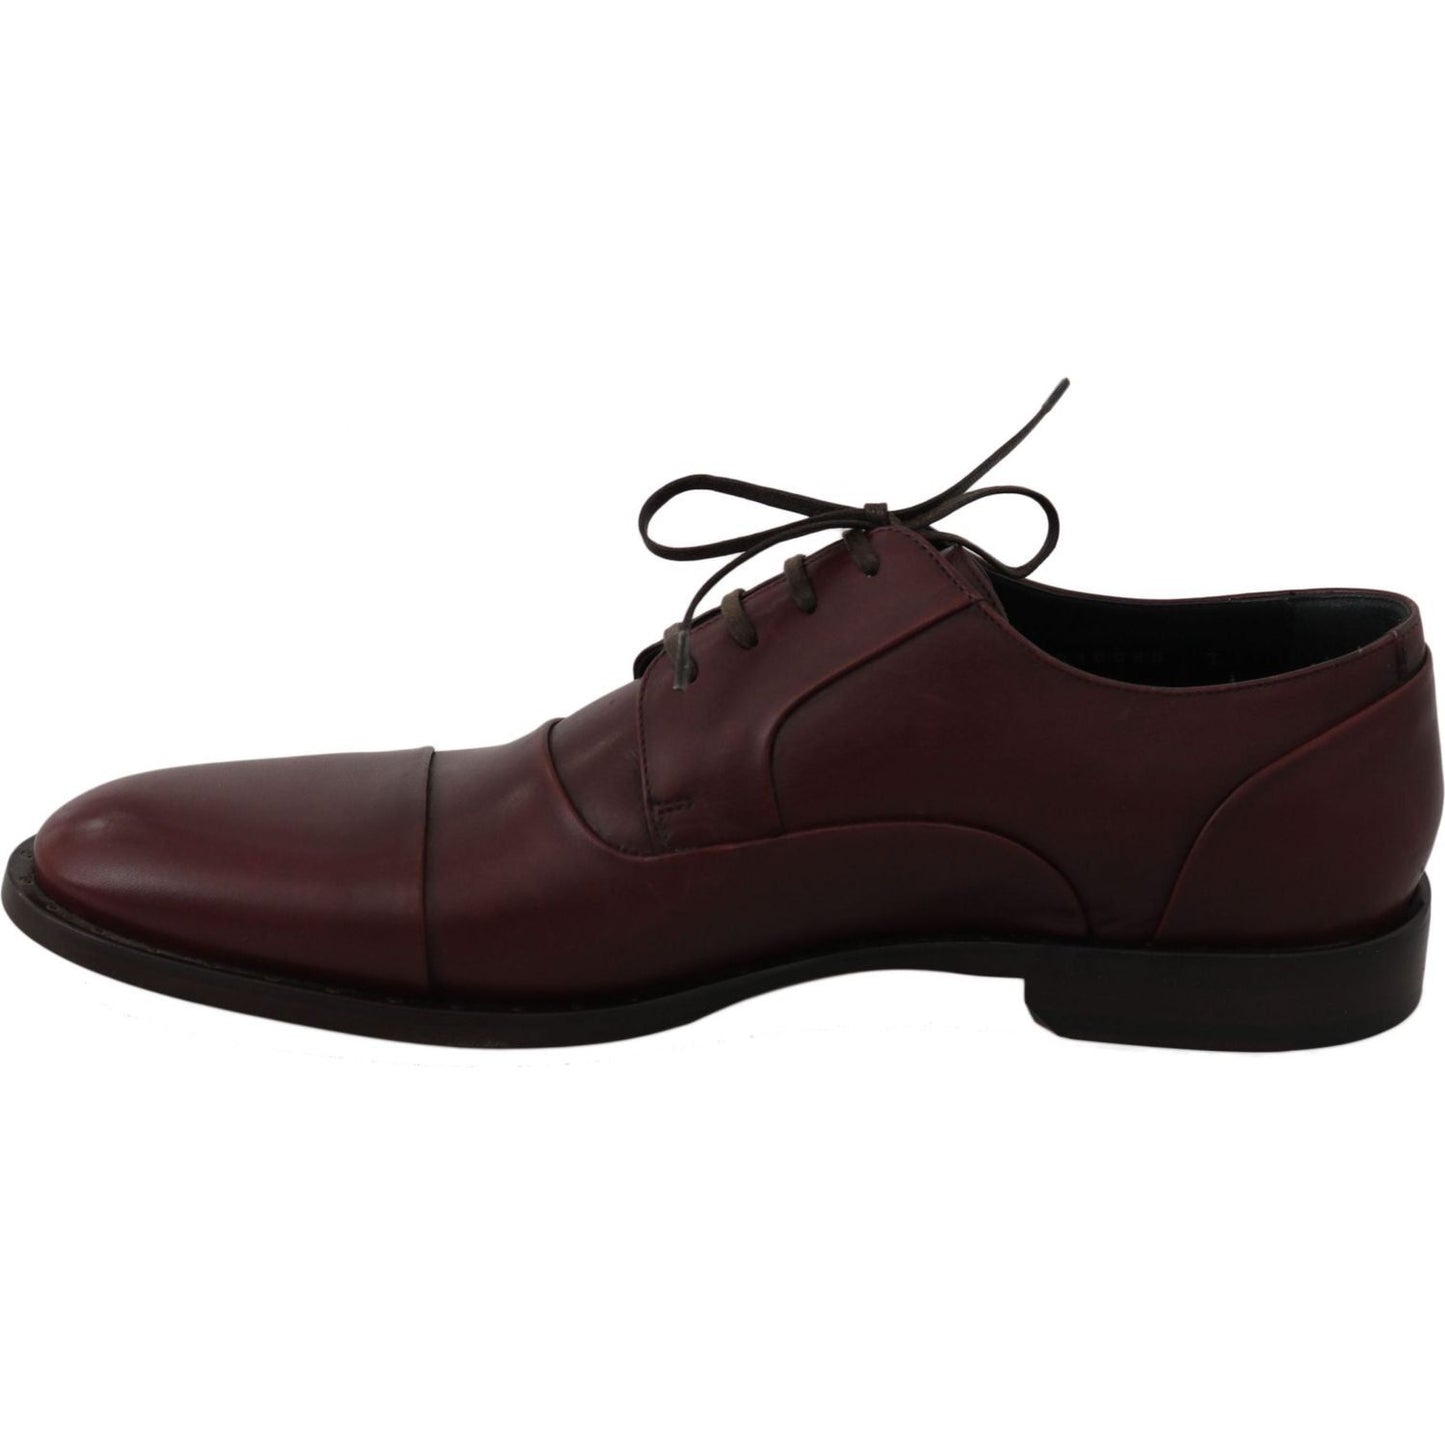 Dolce & Gabbana Elegant Bordeaux Leather Dress Shoes red-bordeaux-leather-derby-formal-shoes IMG_8396-scaled.jpg